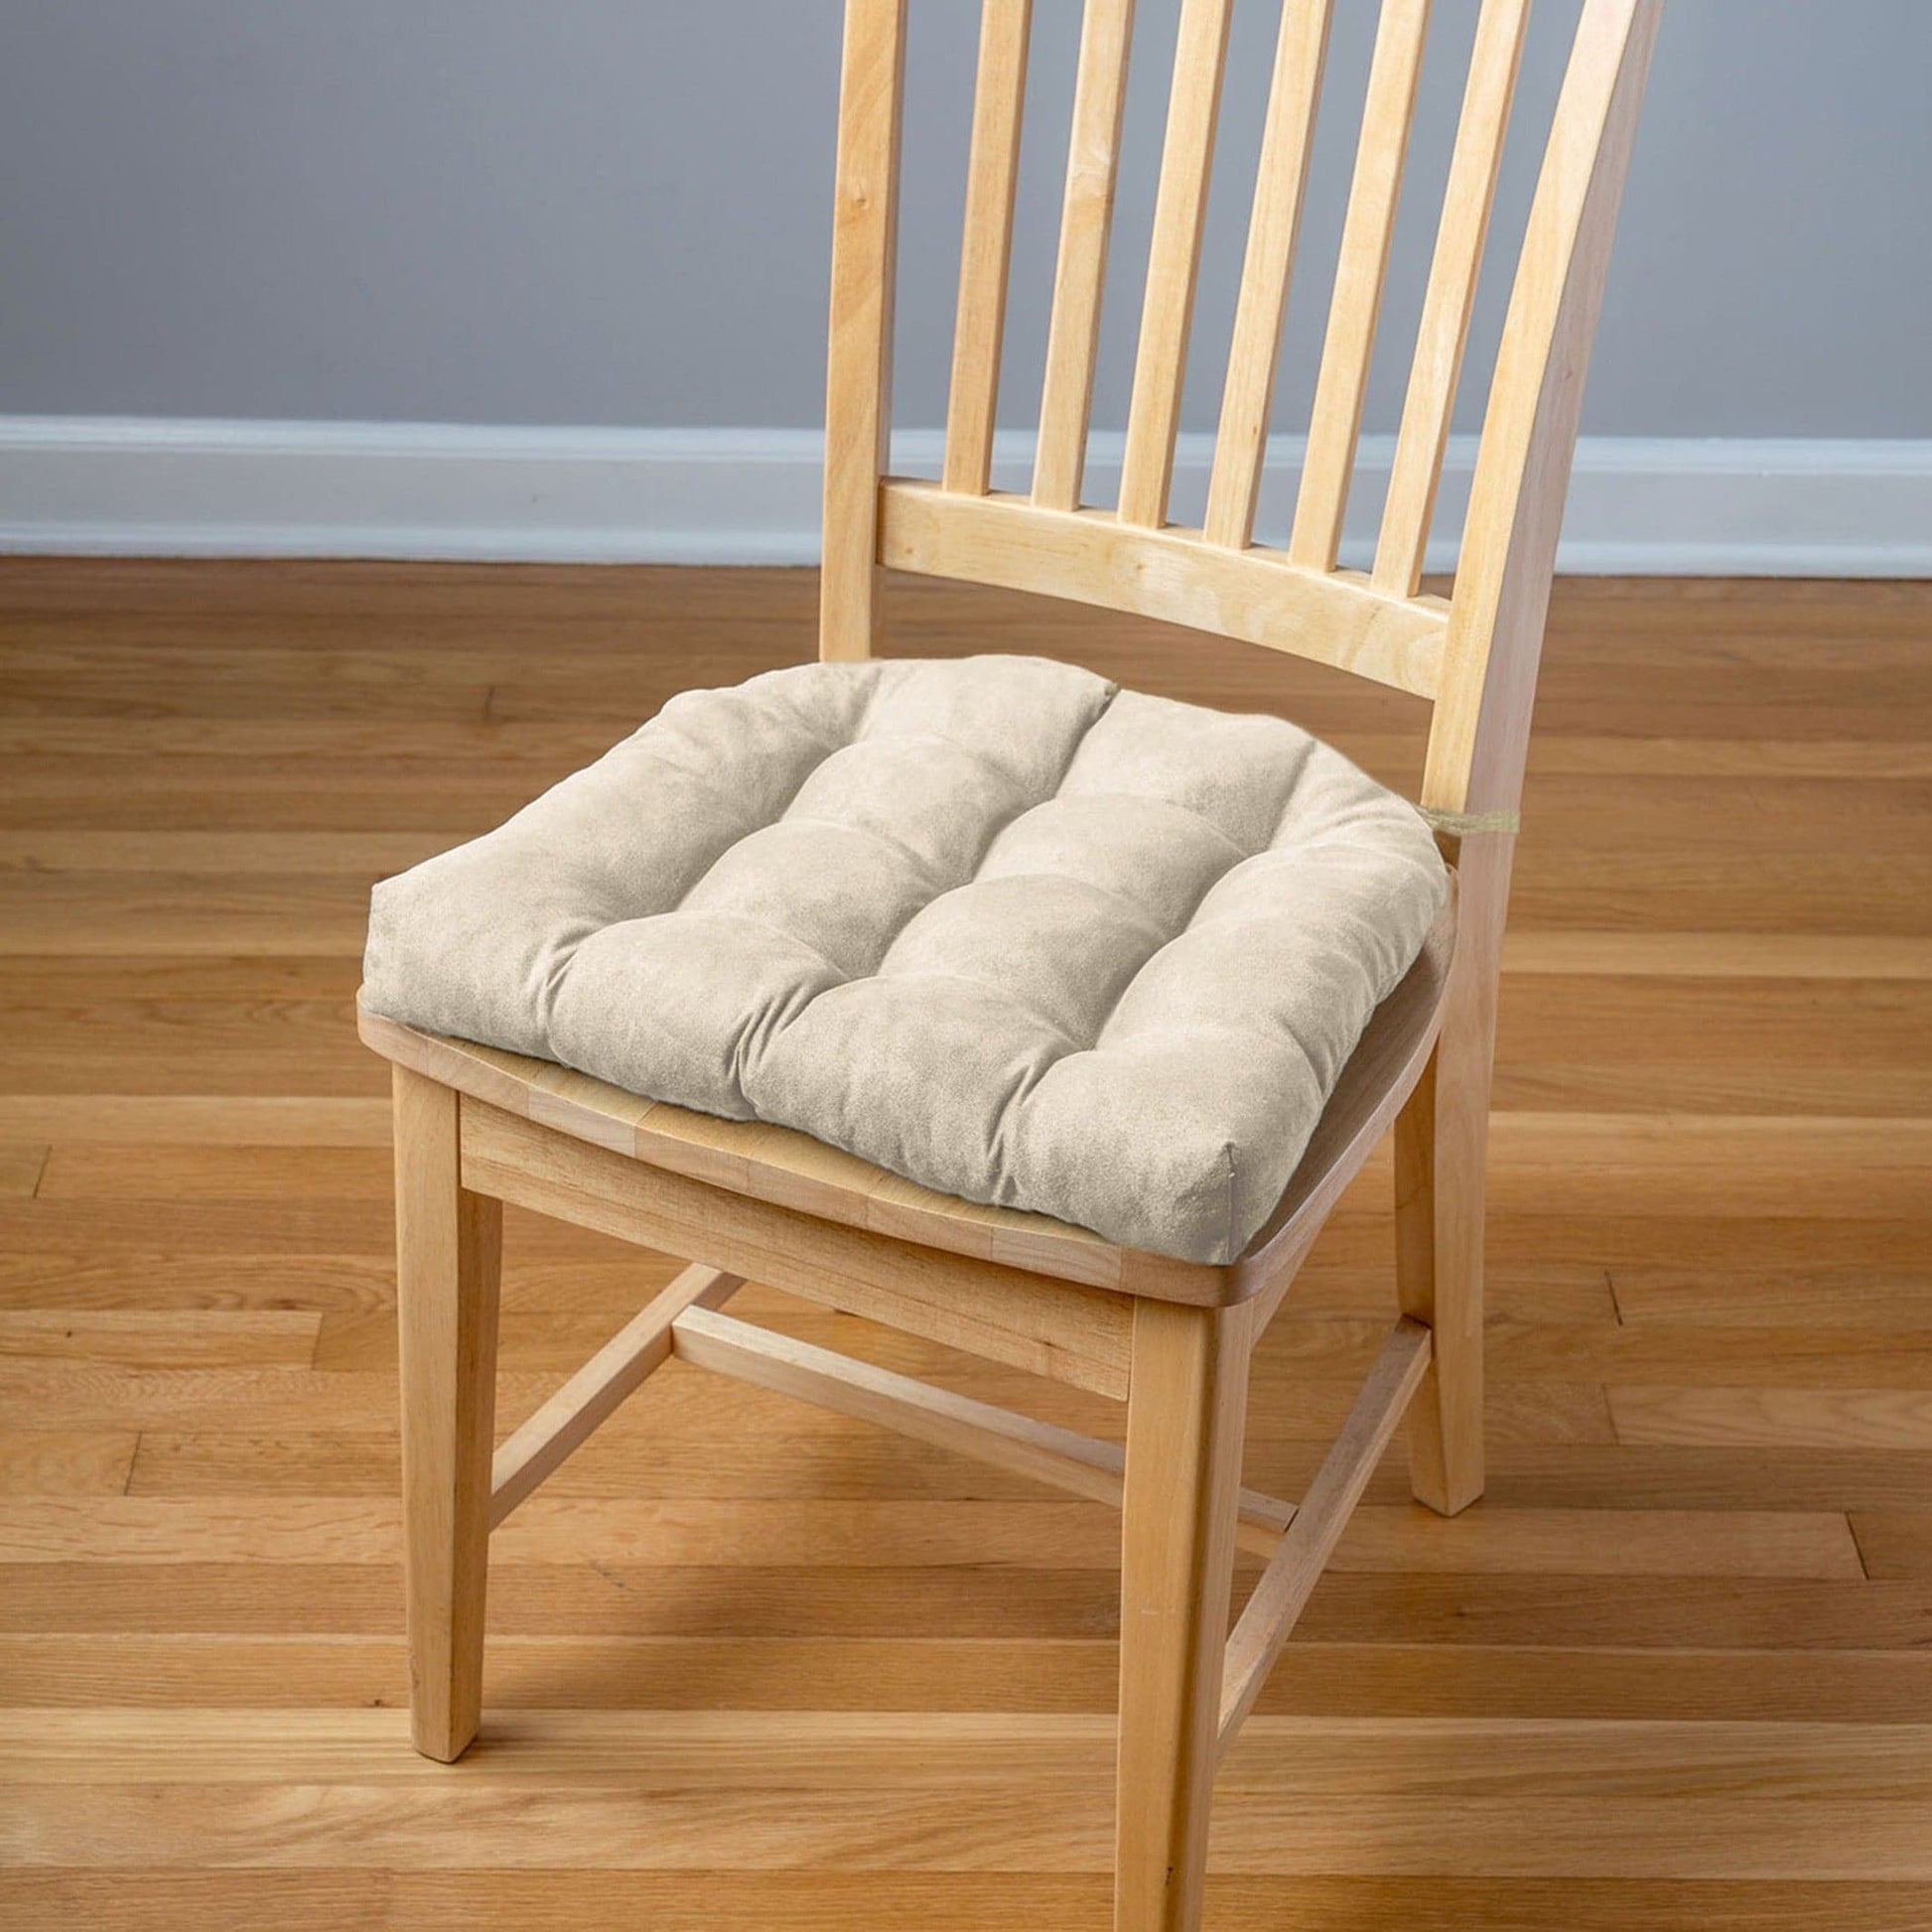 Kartel MASTERS SEAT CUSHION Pads Chair Cushion Pillow Ulphostery